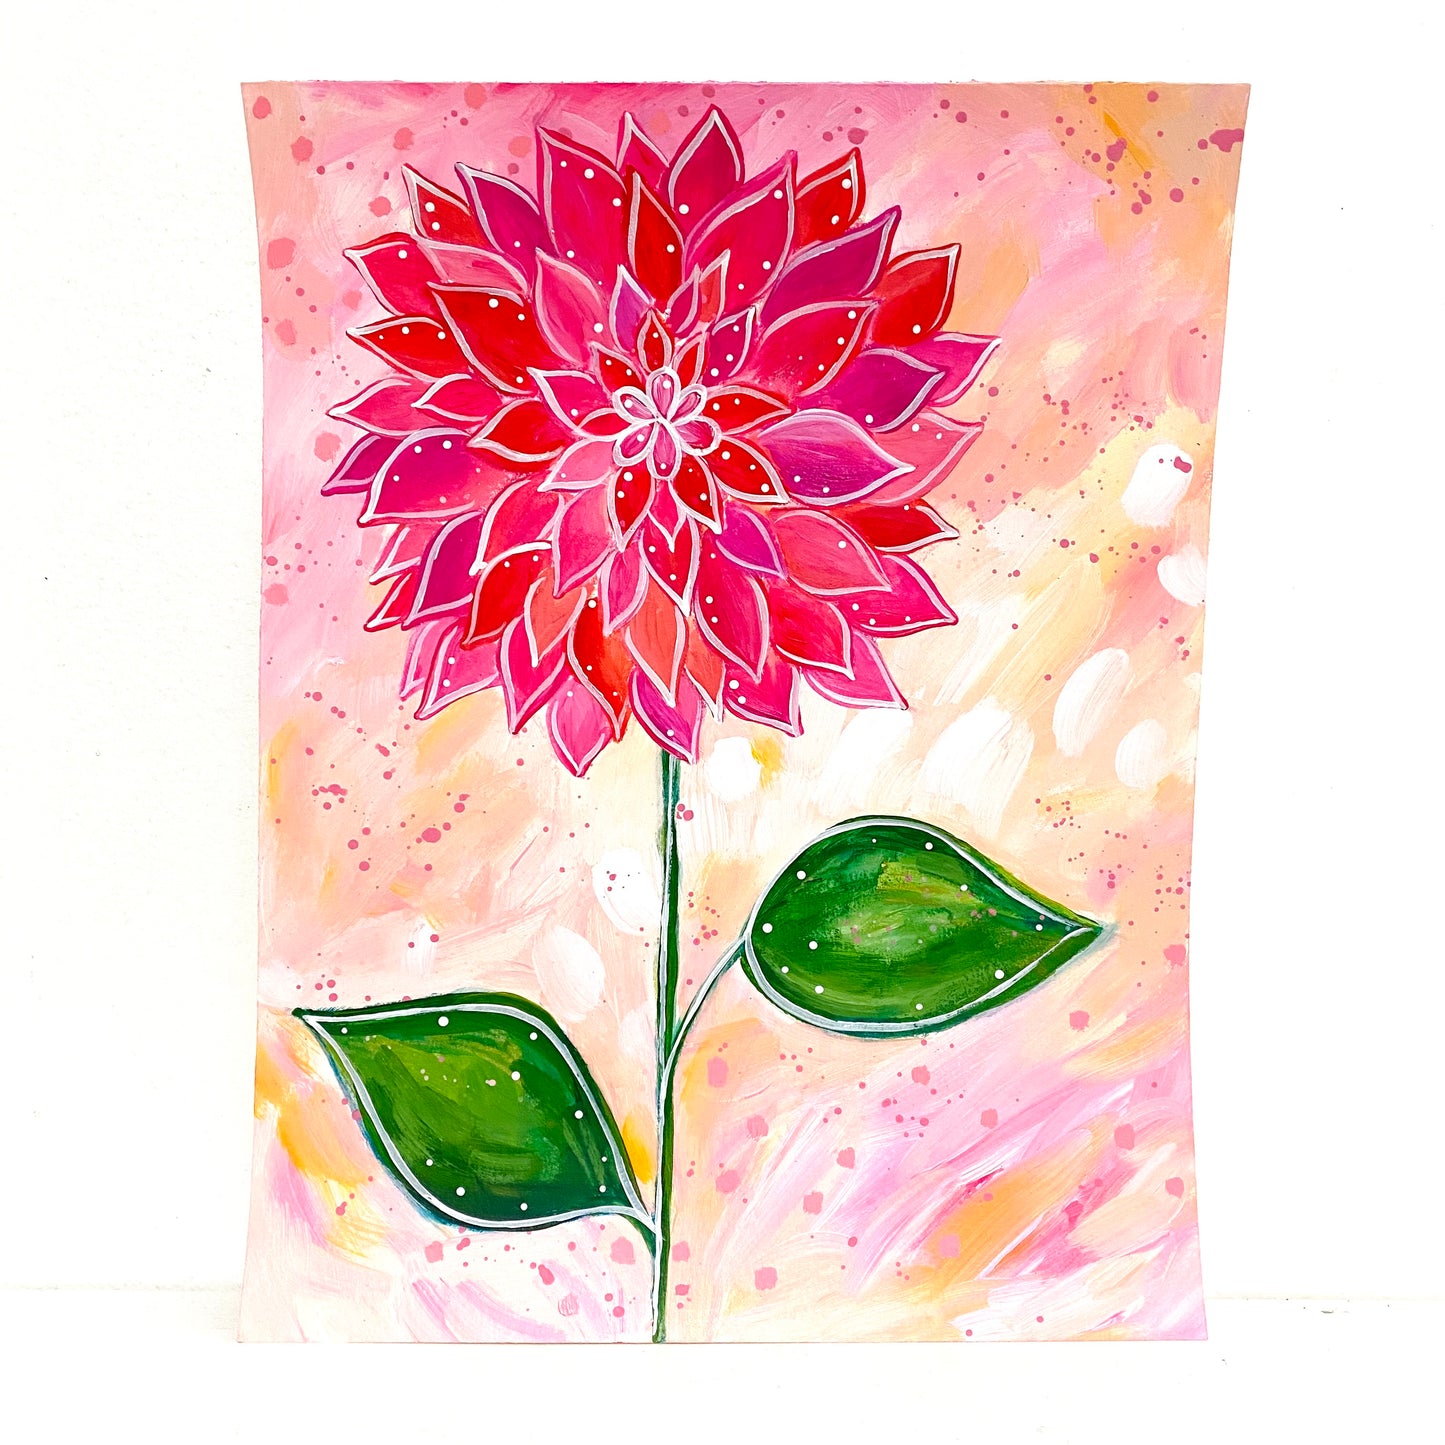 February Flowers Day 5 Dahlia 8.5x11 inch original painting